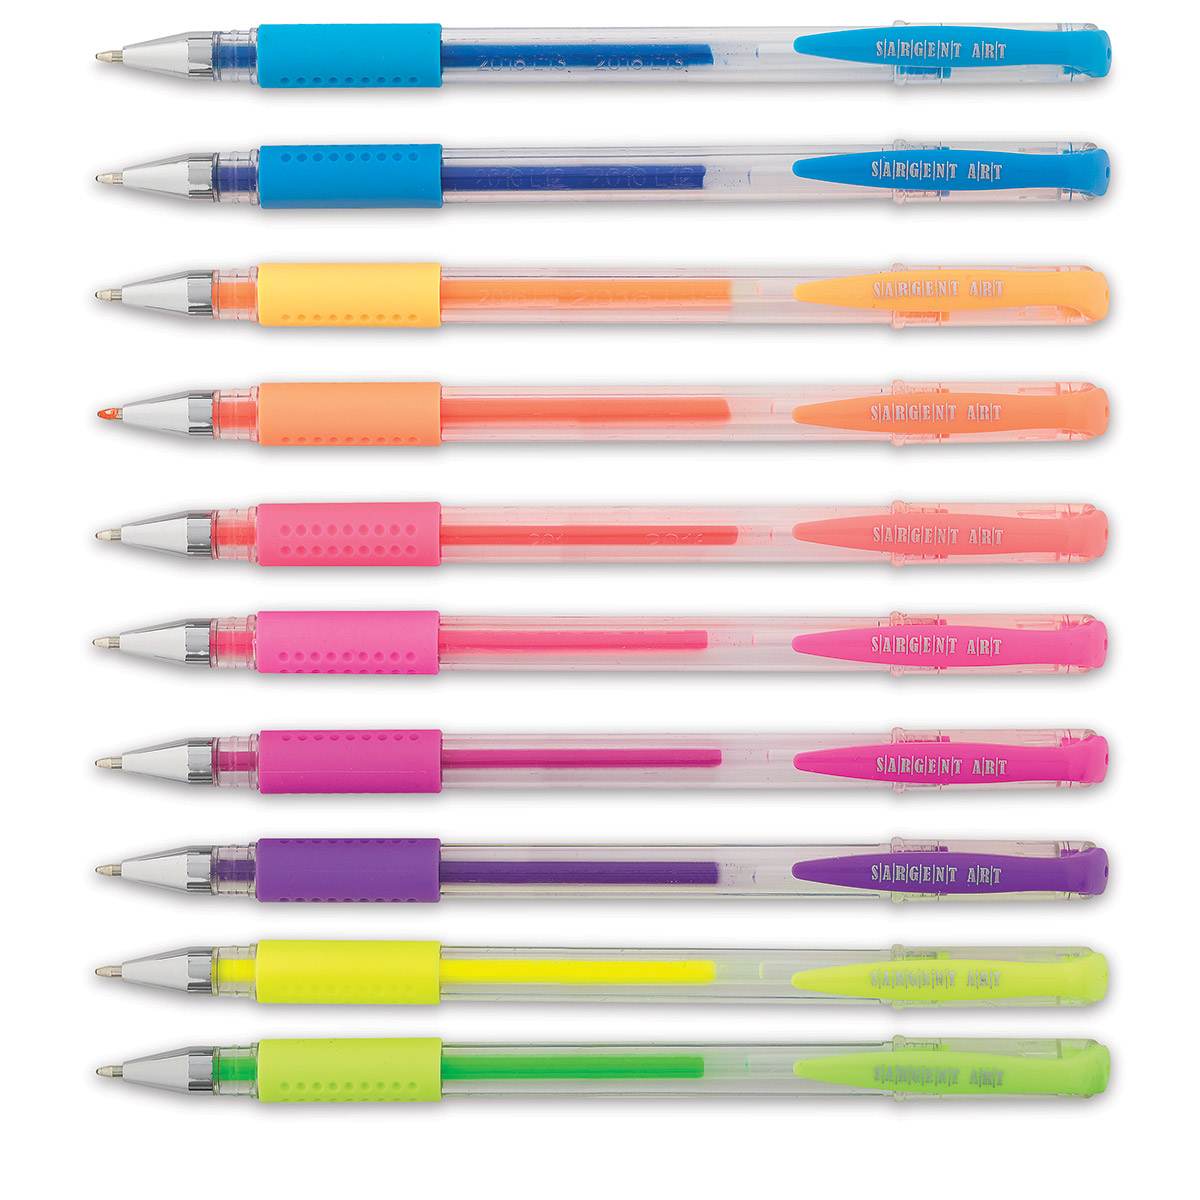 Sargent Art Glitter Gel Pens - 10 count